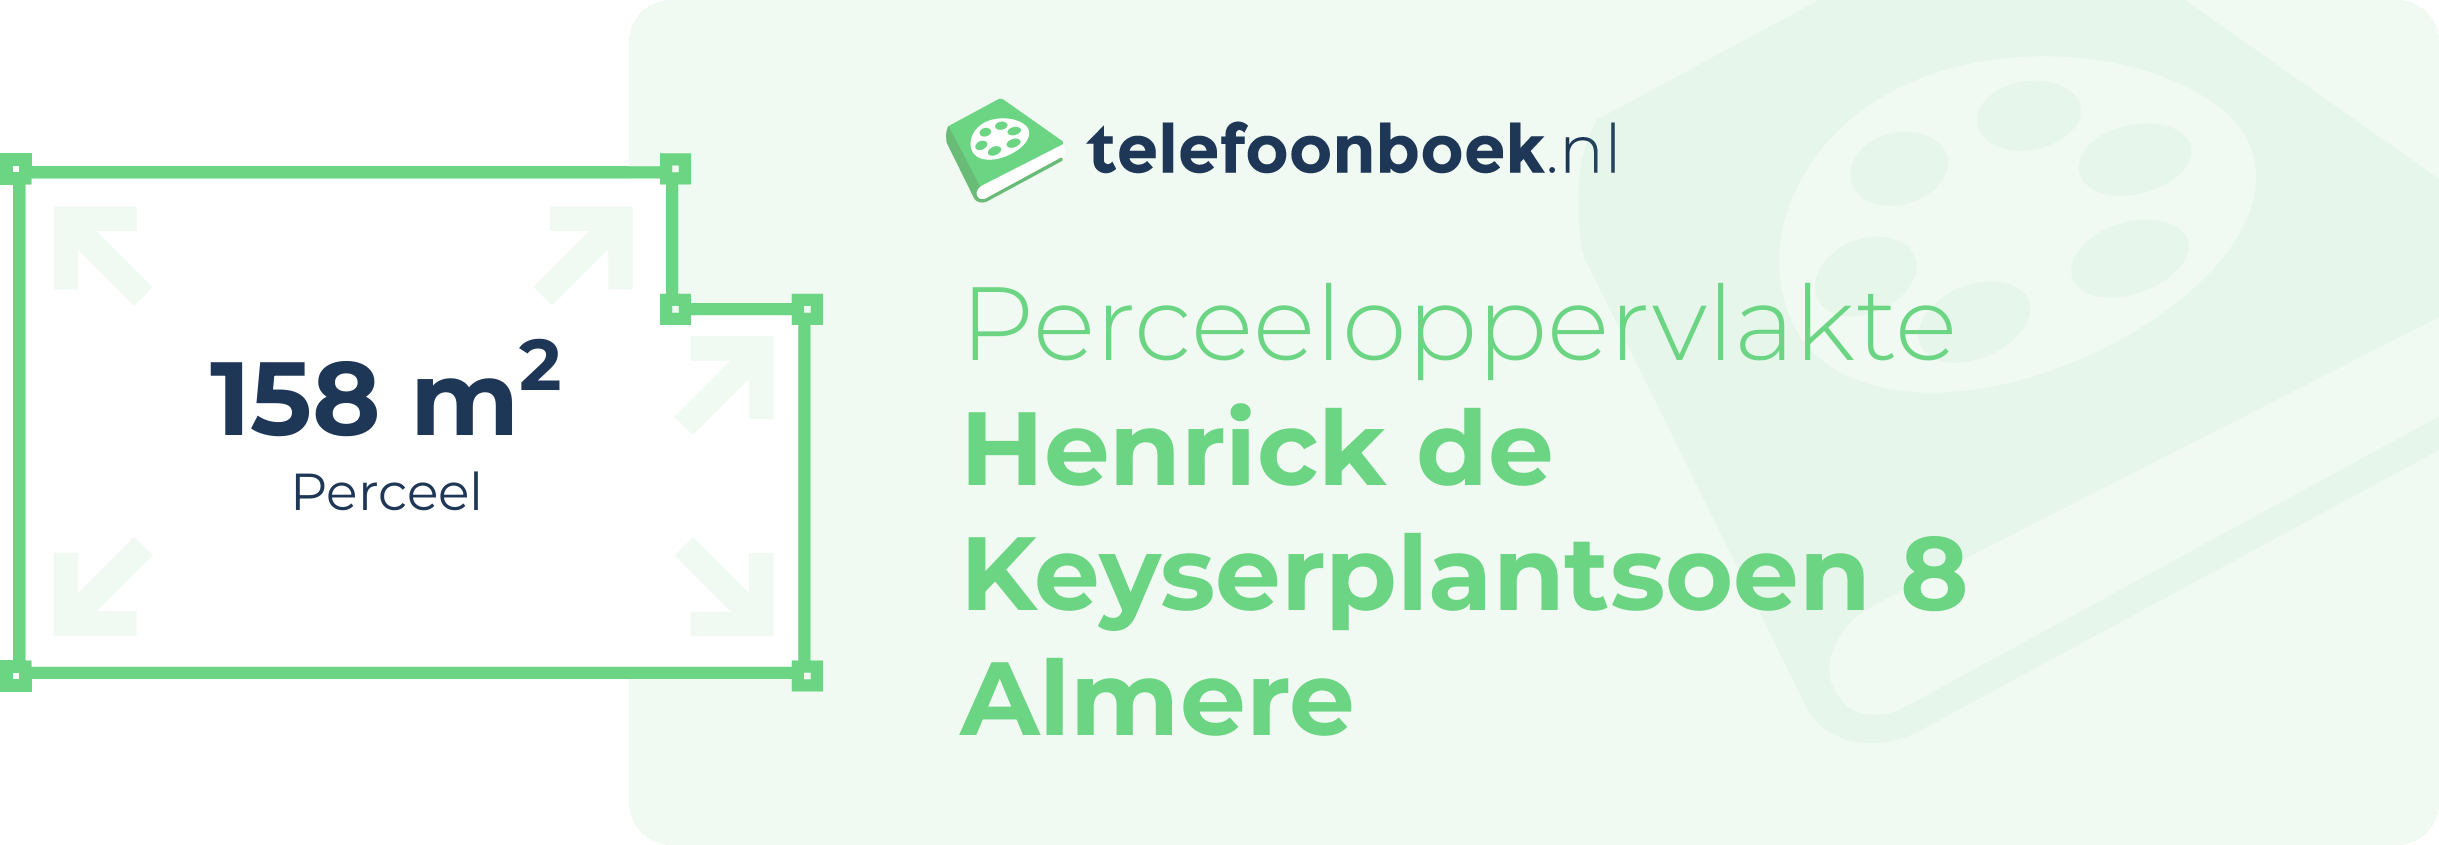 Perceeloppervlakte Henrick De Keyserplantsoen 8 Almere